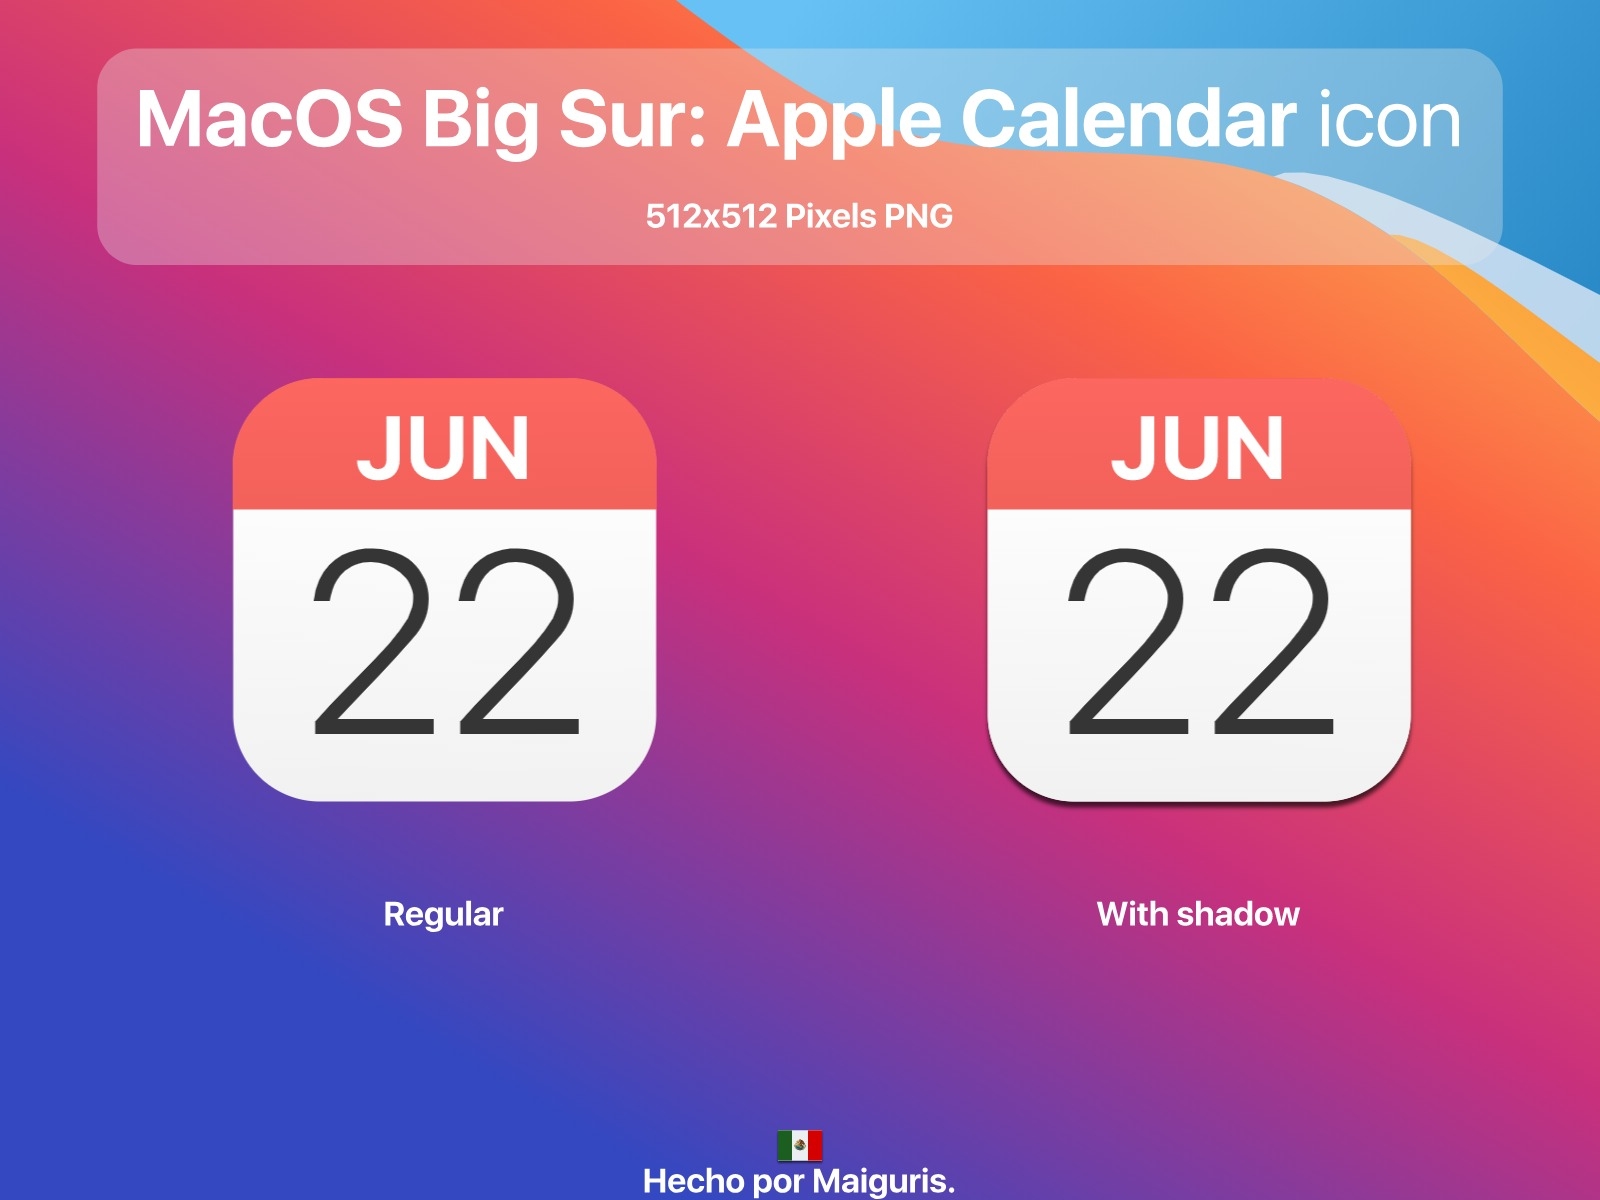 MacOS Big Sur New Apple Calendar Icon by Ivan R. on Dribbble